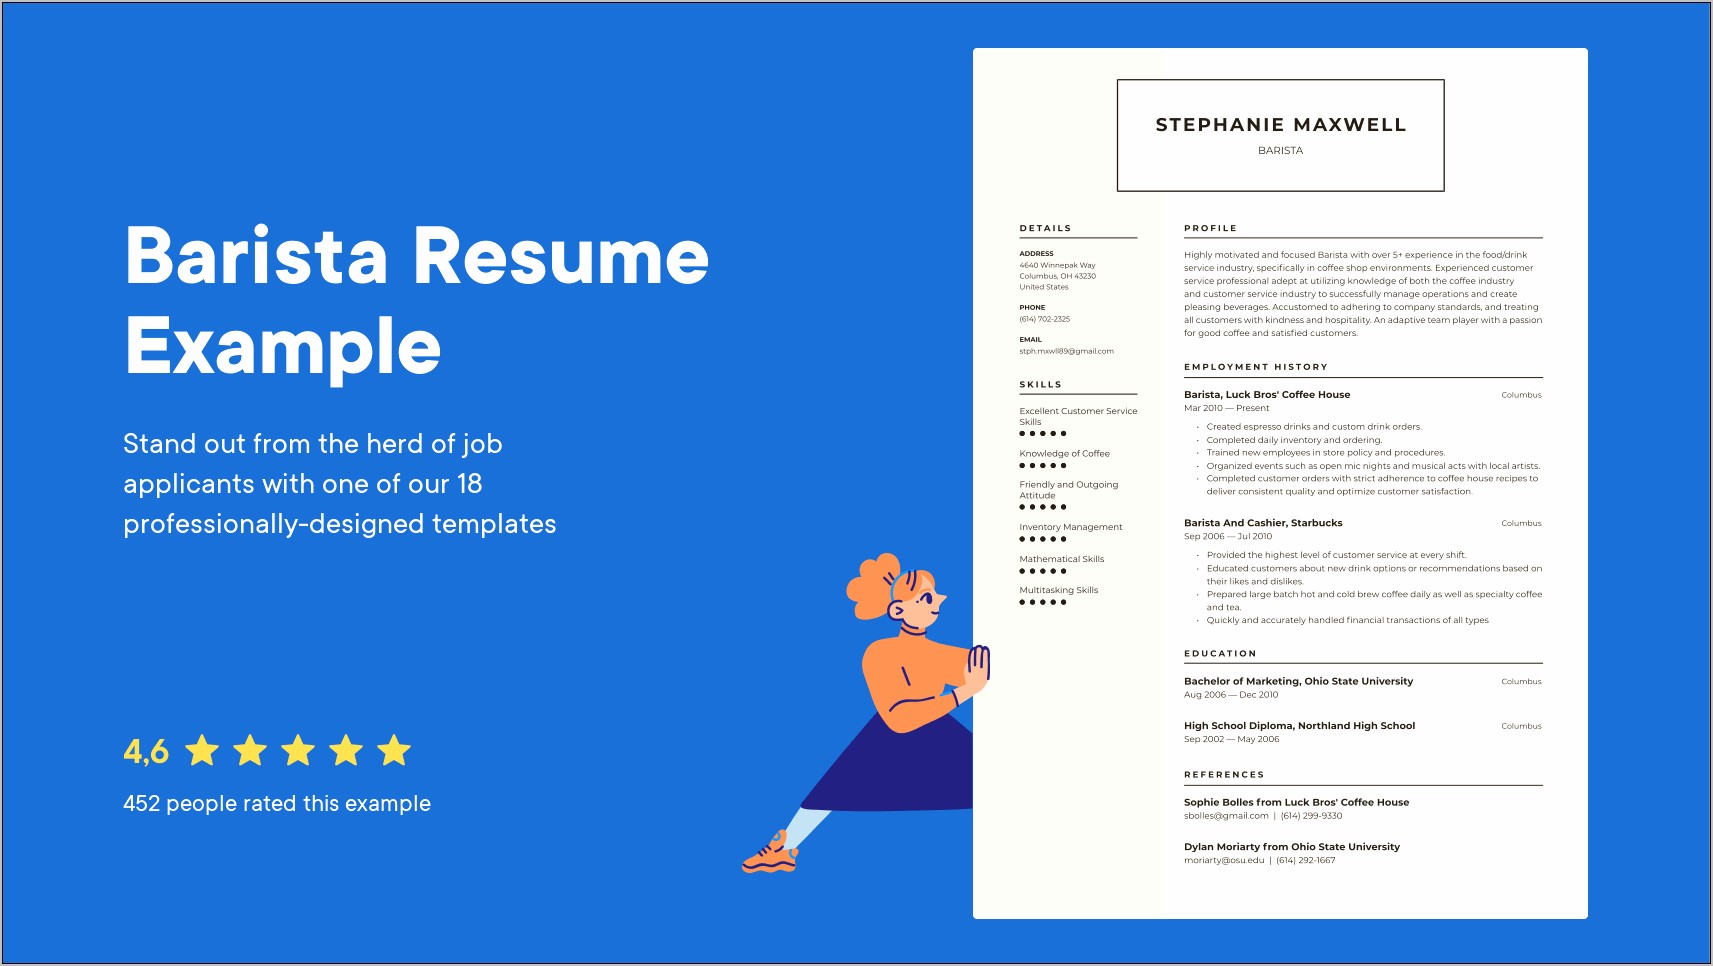 Resume Job Description For Barista